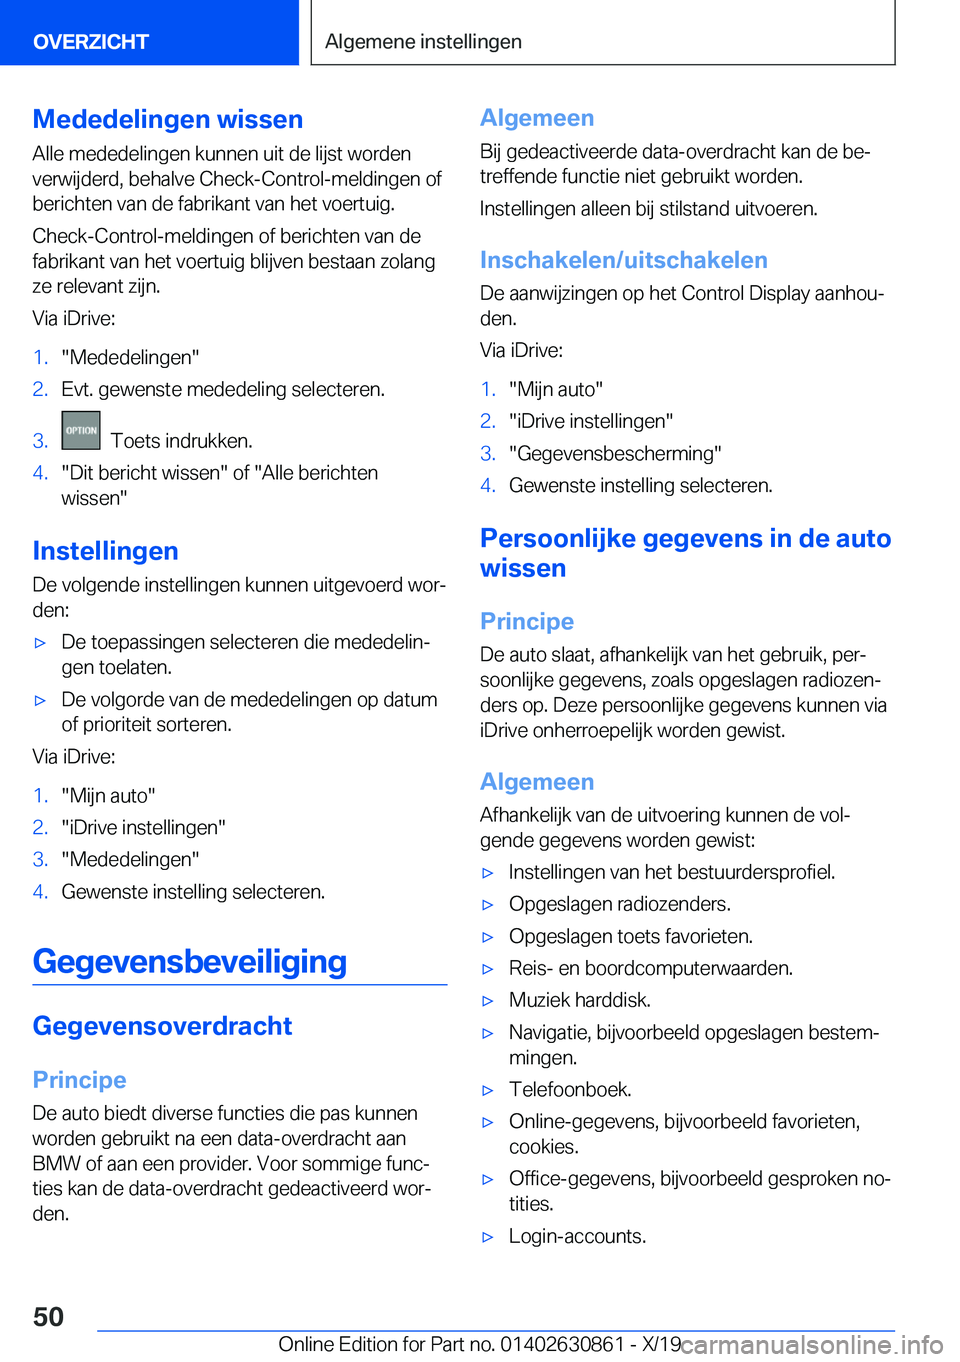 BMW 4 SERIES GRAN COUPE 2020  Instructieboekjes (in Dutch) �M�e�d�e�d�e�l�i�n�g�e�n��w�i�s�s�e�n�A�l�l�e��m�e�d�e�d�e�l�i�n�g�e�n��k�u�n�n�e�n��u�i�t��d�e��l�i�j�s�t��w�o�r�d�e�n�v�e�r�w�i�j�d�e�r�d�,��b�e�h�a�l�v�e��C�h�e�c�k�-�C�o�n�t�r�o�l�-�m�e�l